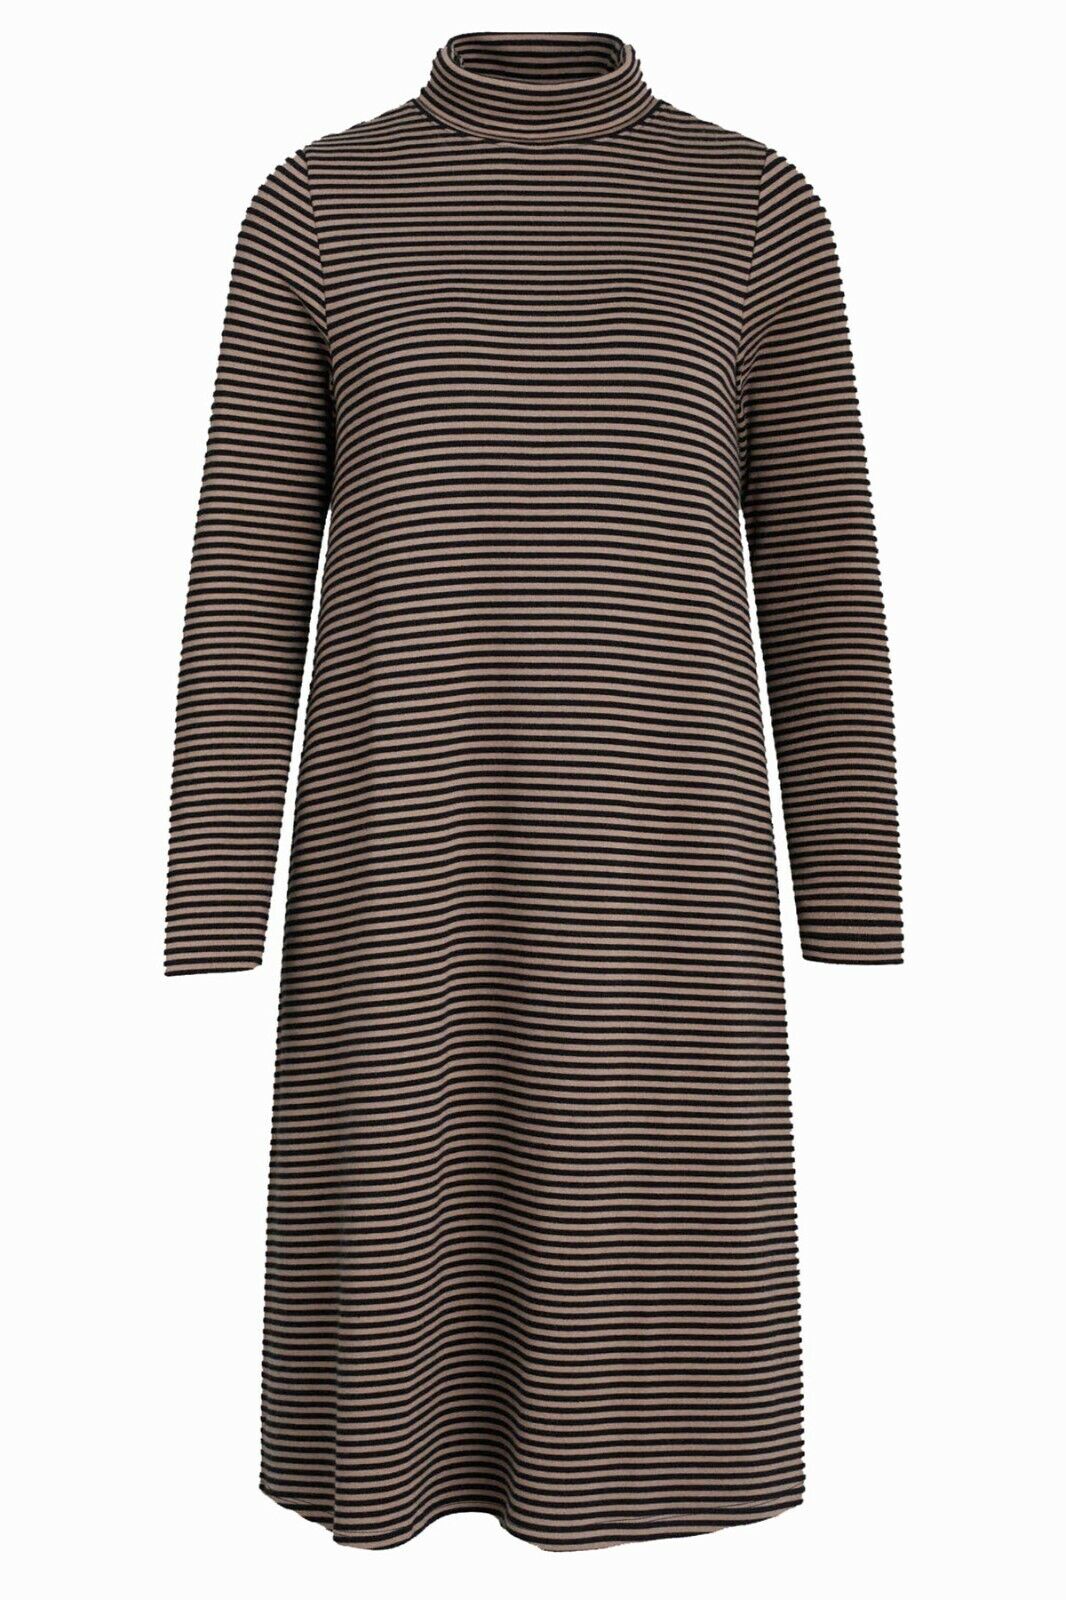 EX SEASALT Black Stripe Swing Silhouette Branching Dress Sizes 10, 12, 14, 16